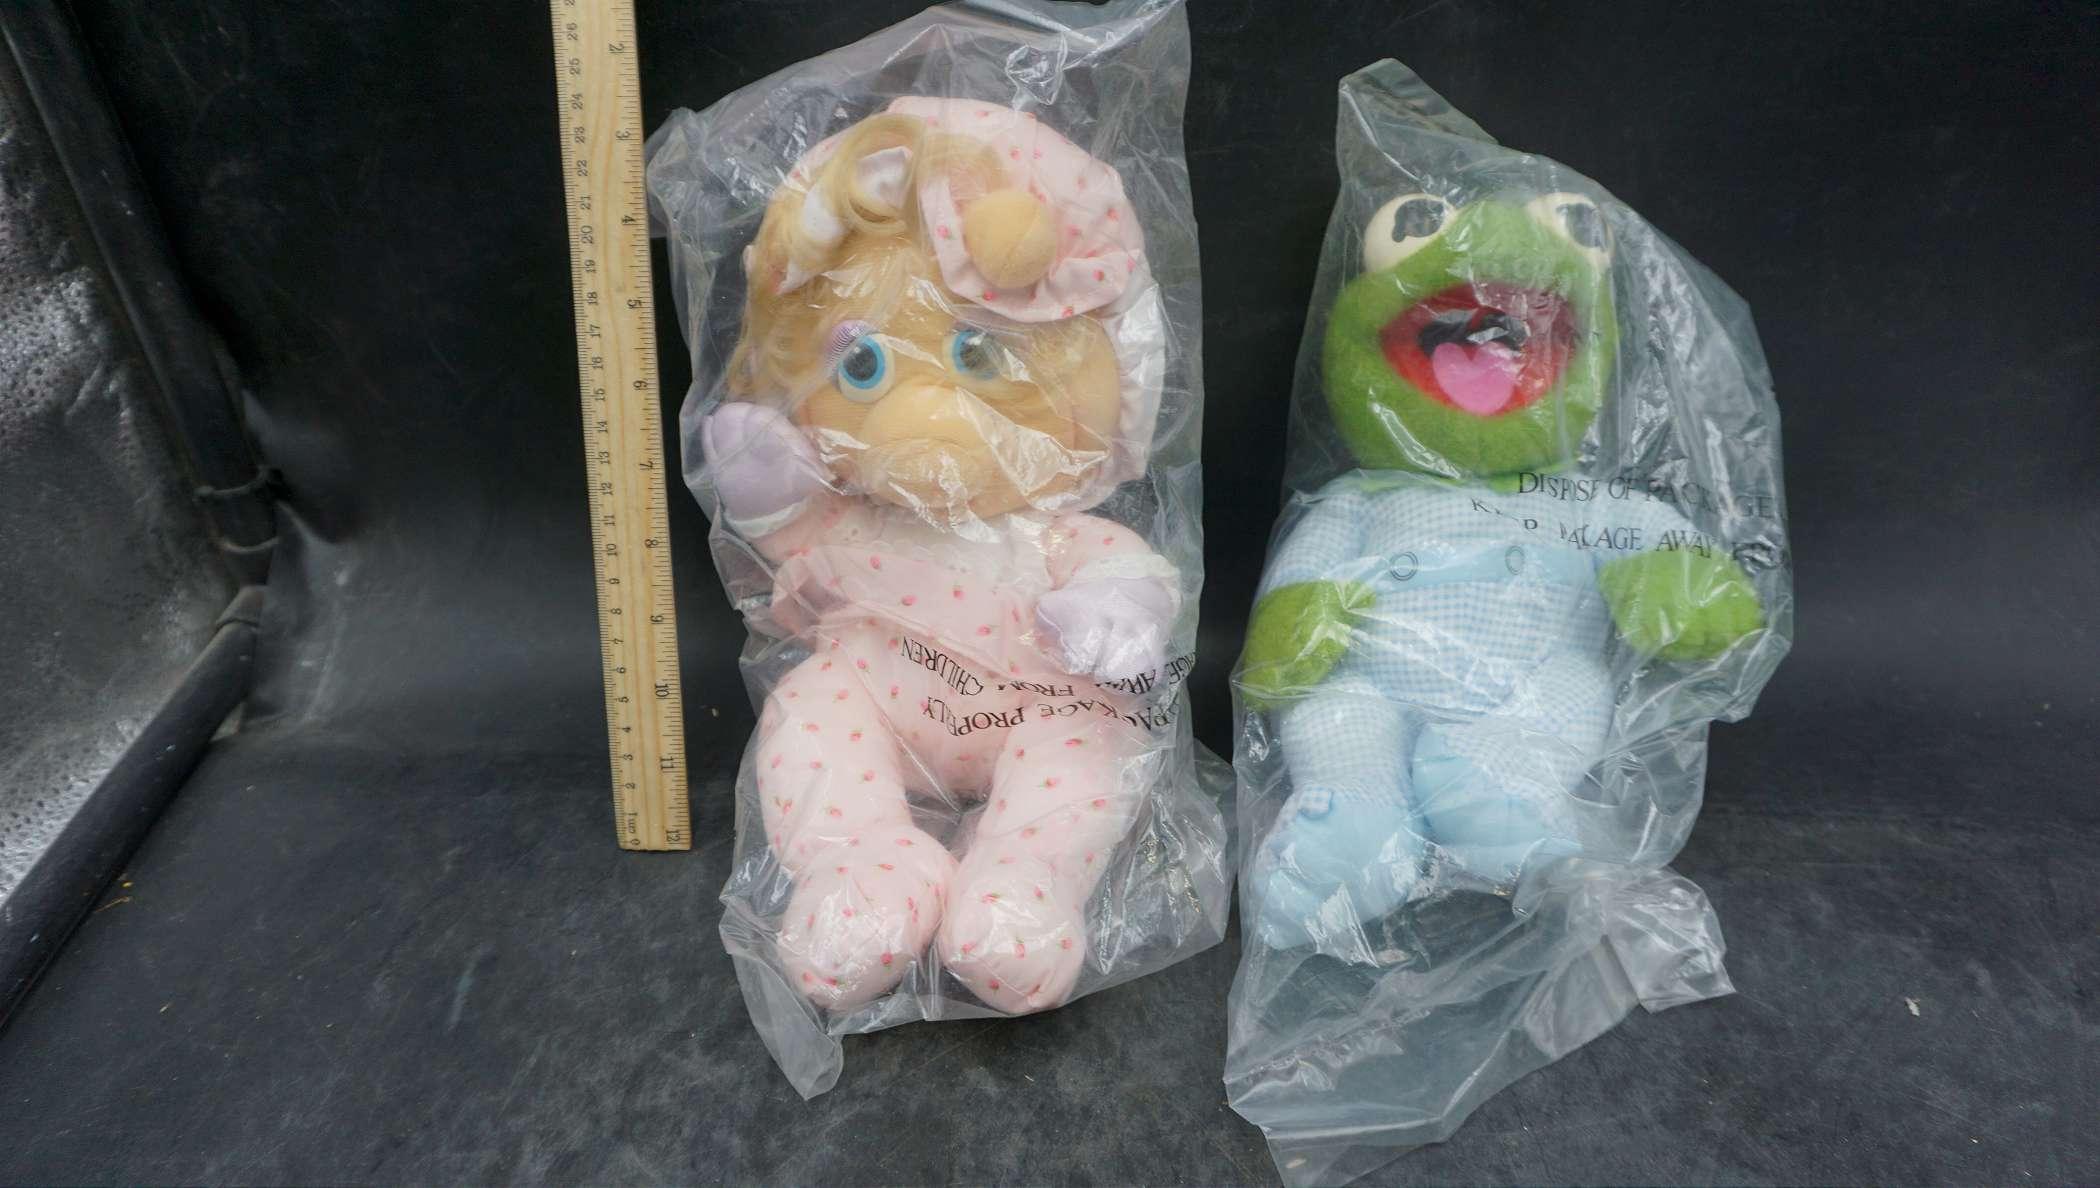 Stuffed Animals - Kermit The Frog & Miss Piggy